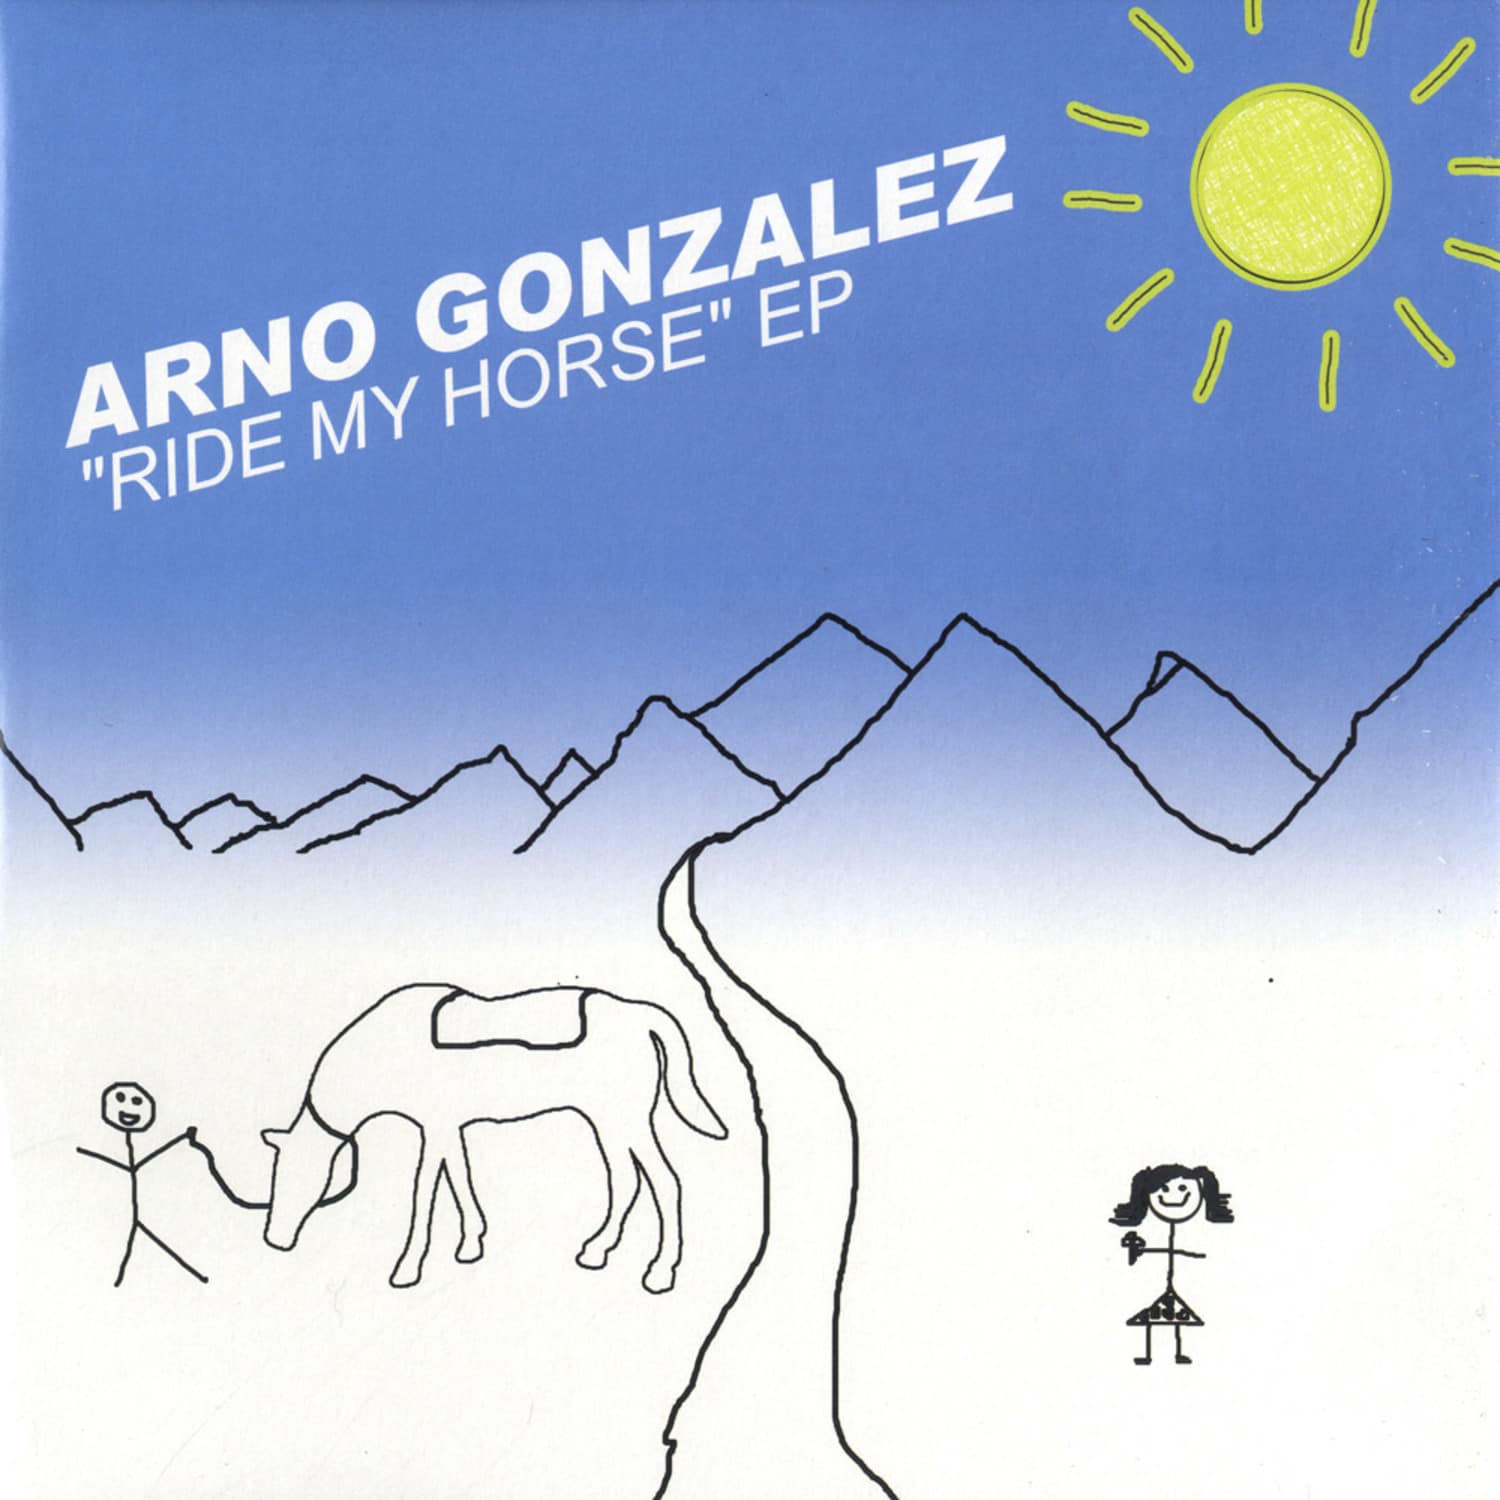 Arno Gonzalez - RIDE MY HORSE EP